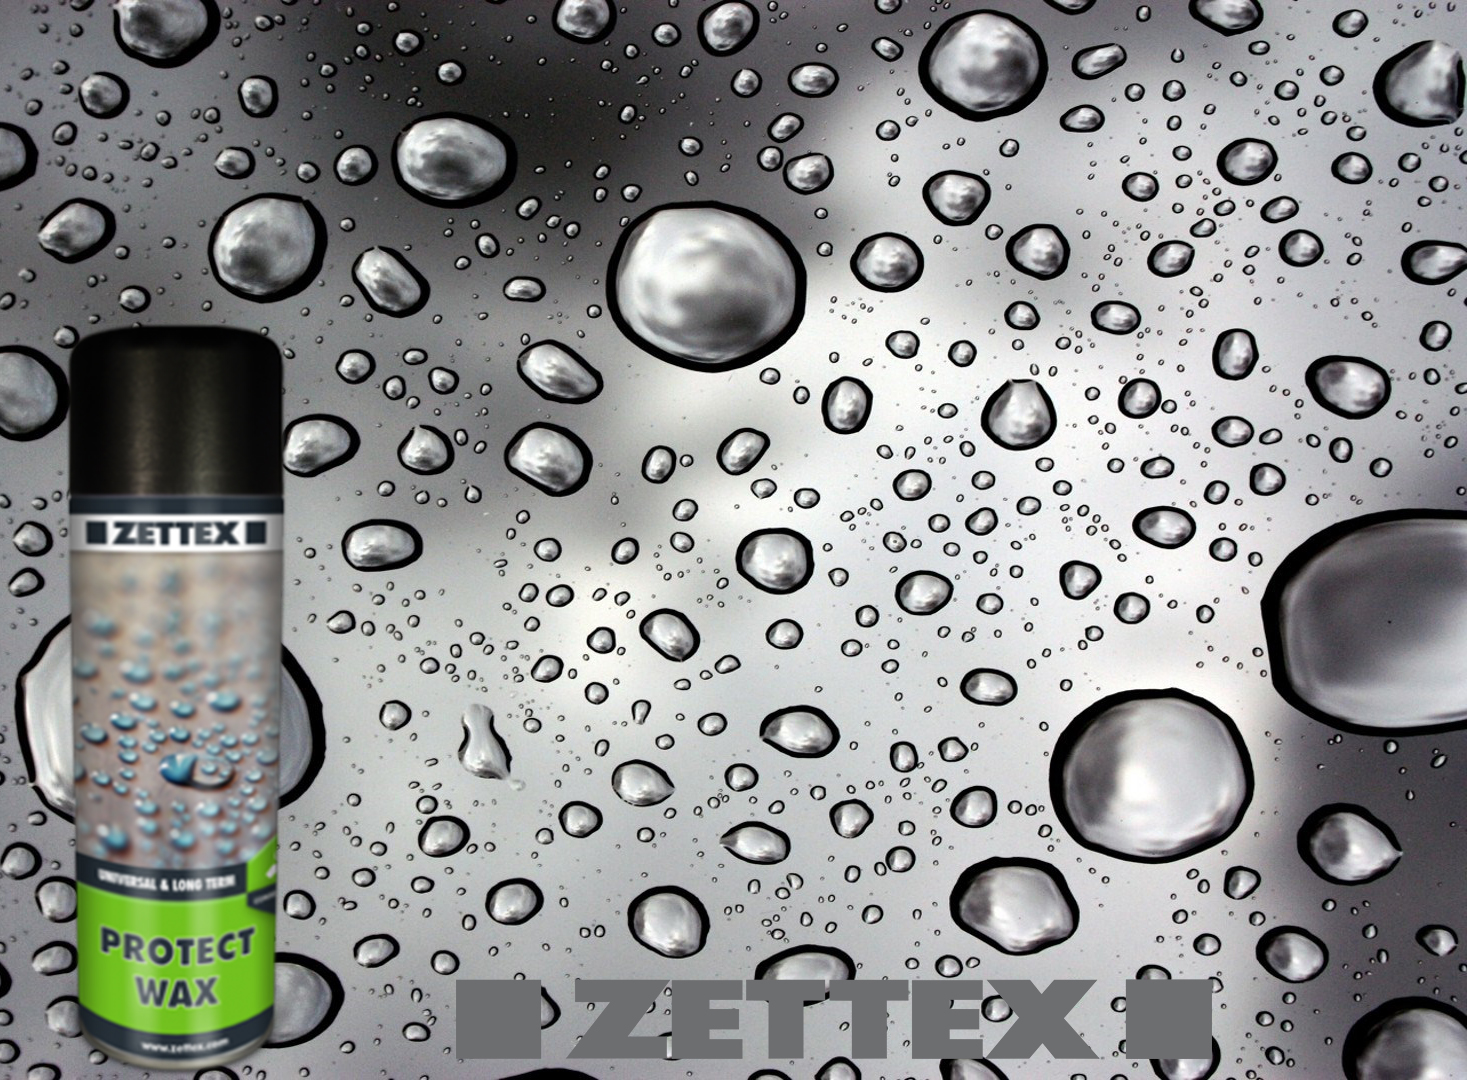 اسپری واکس زتکس Zettex Protect Wax Spray